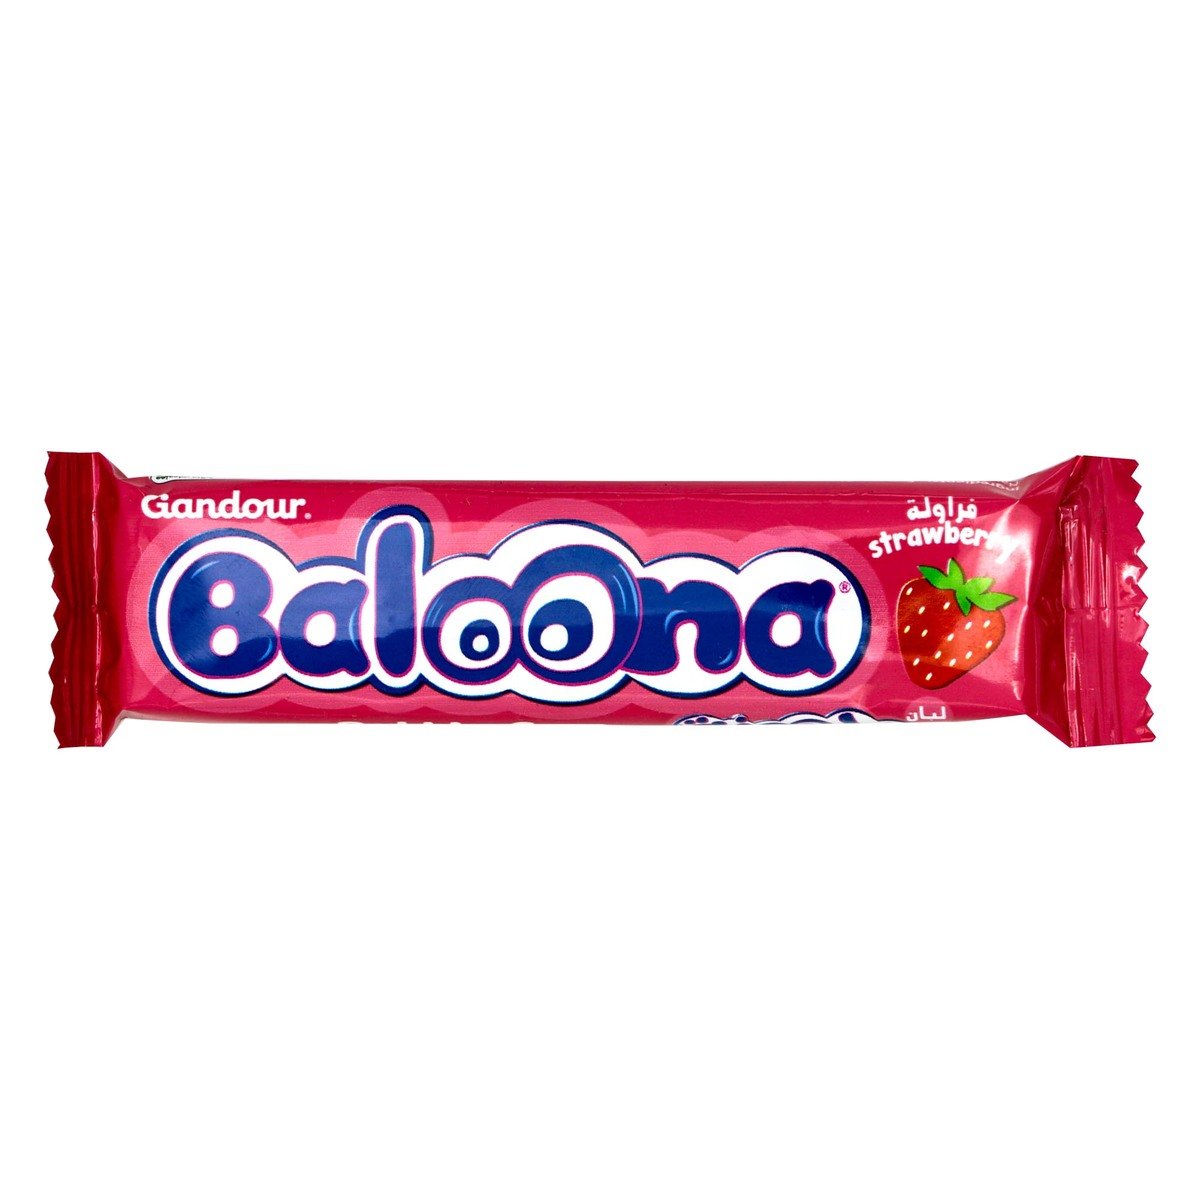 Gandour Baloona Strawberry Bubble Gum 20 x 18g